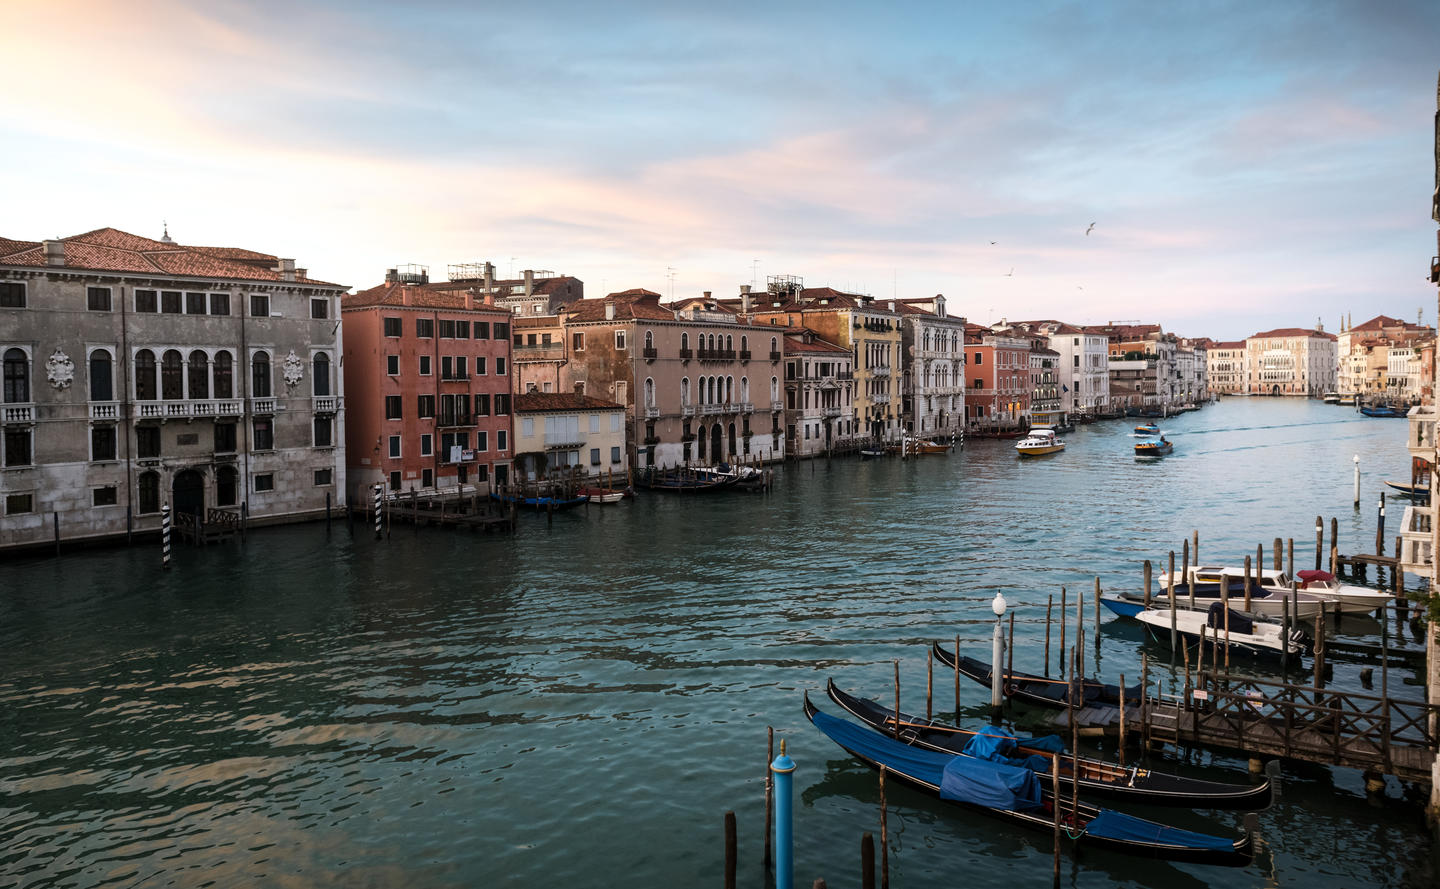 Aman Venice, Italy - Canal